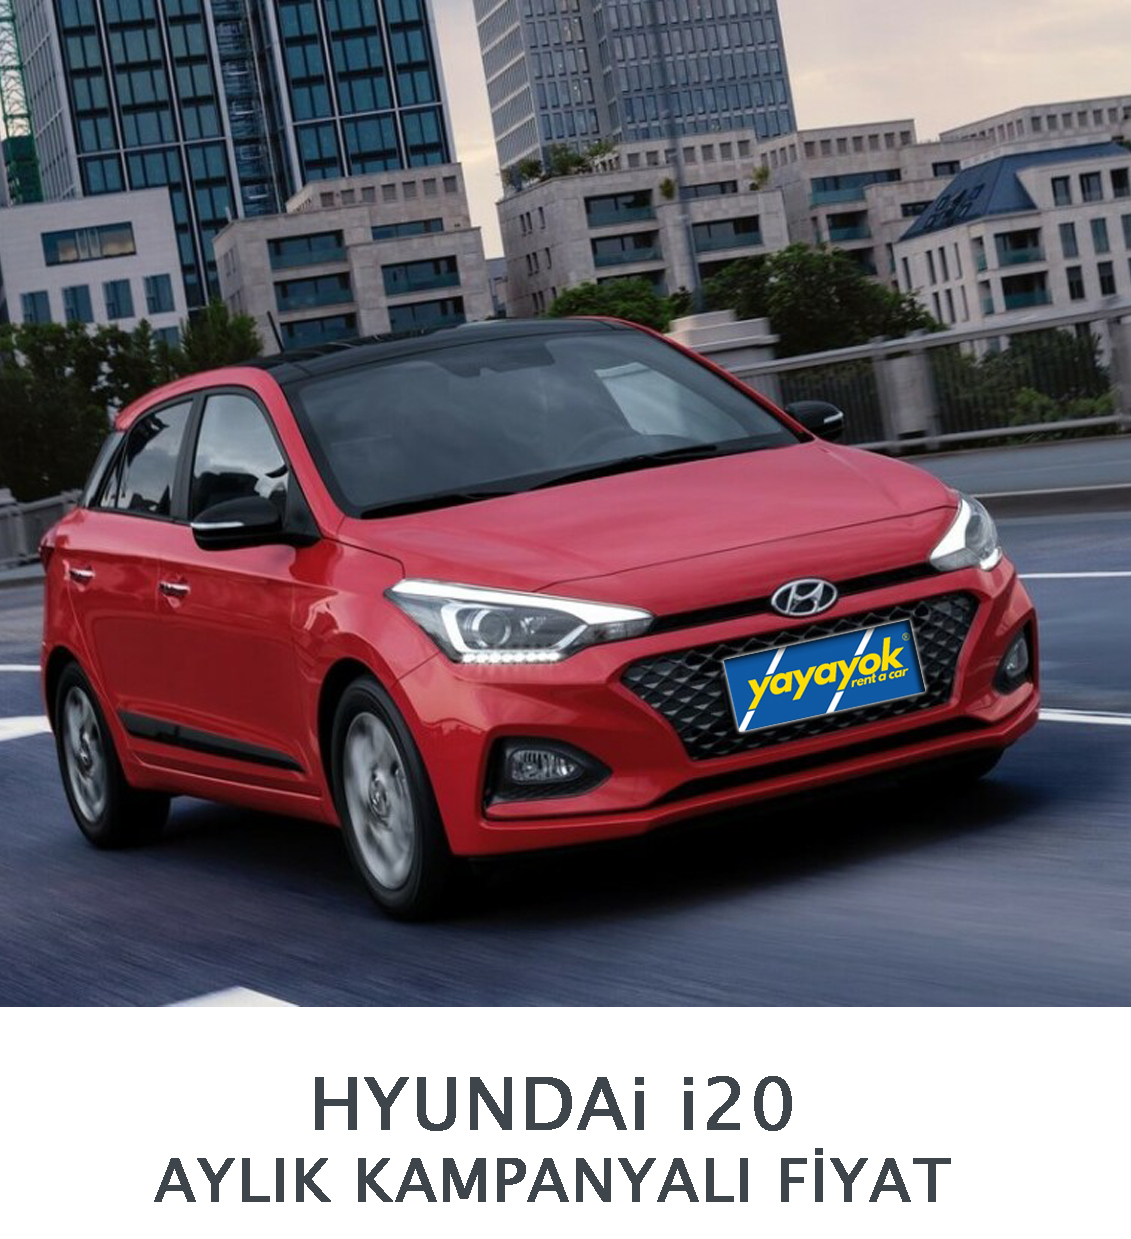 Aylık Kampanyalı Fiyat Hyundai i20